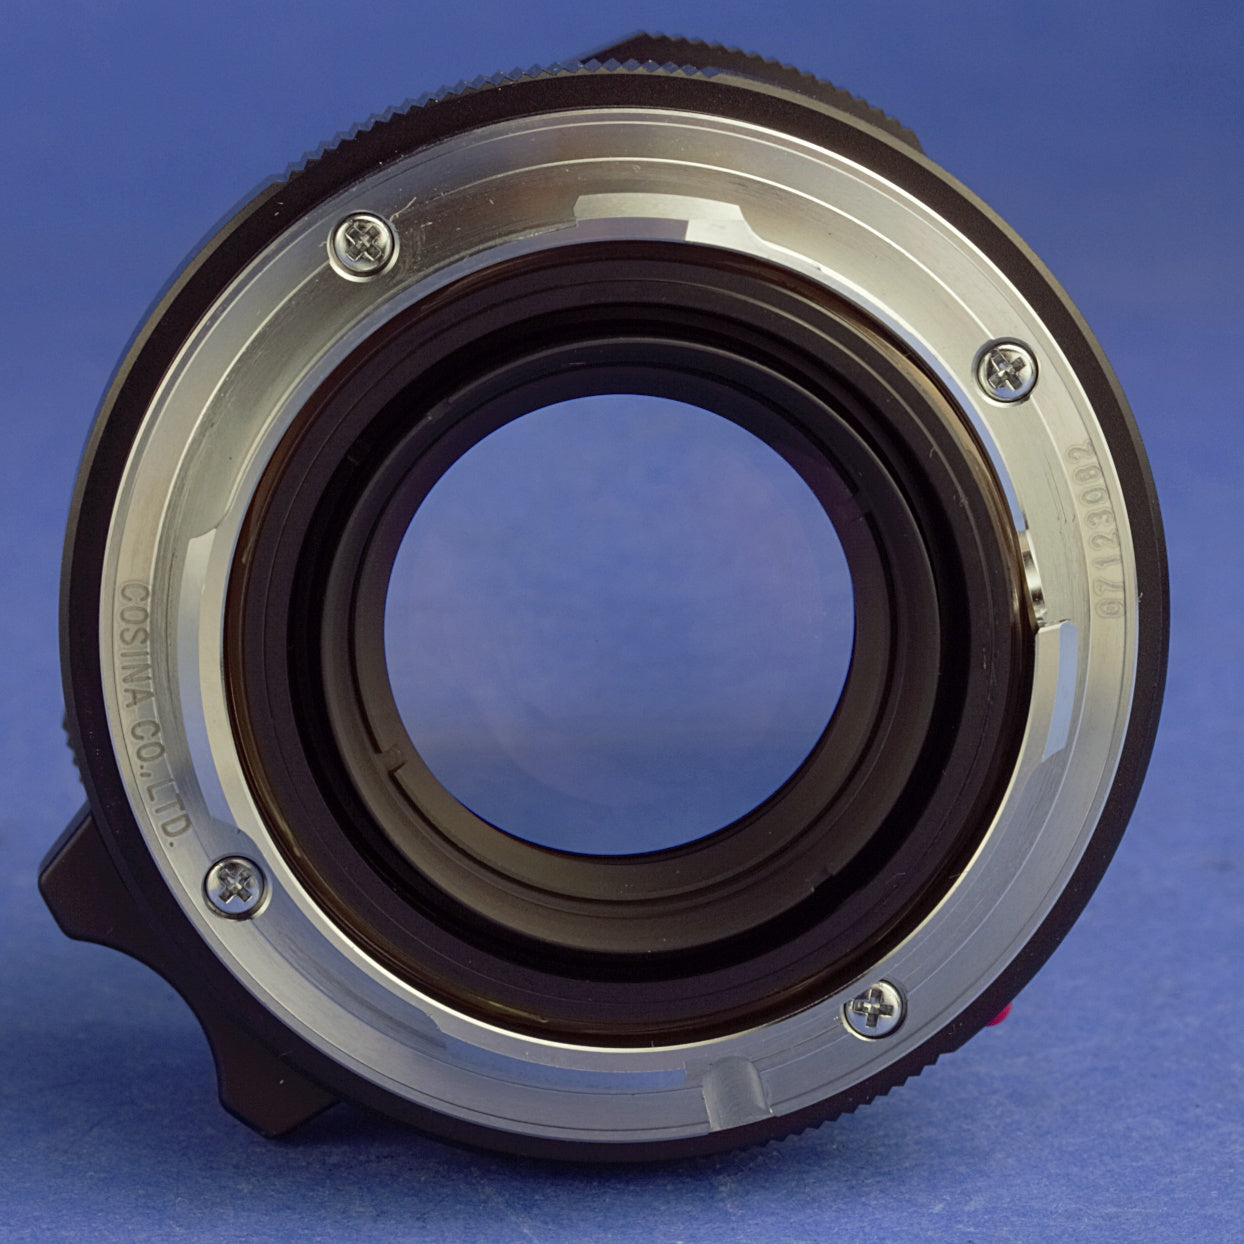 Voigtlander Nokton Classic 35mm 1.4 II Lens VM Mount Mint Condition